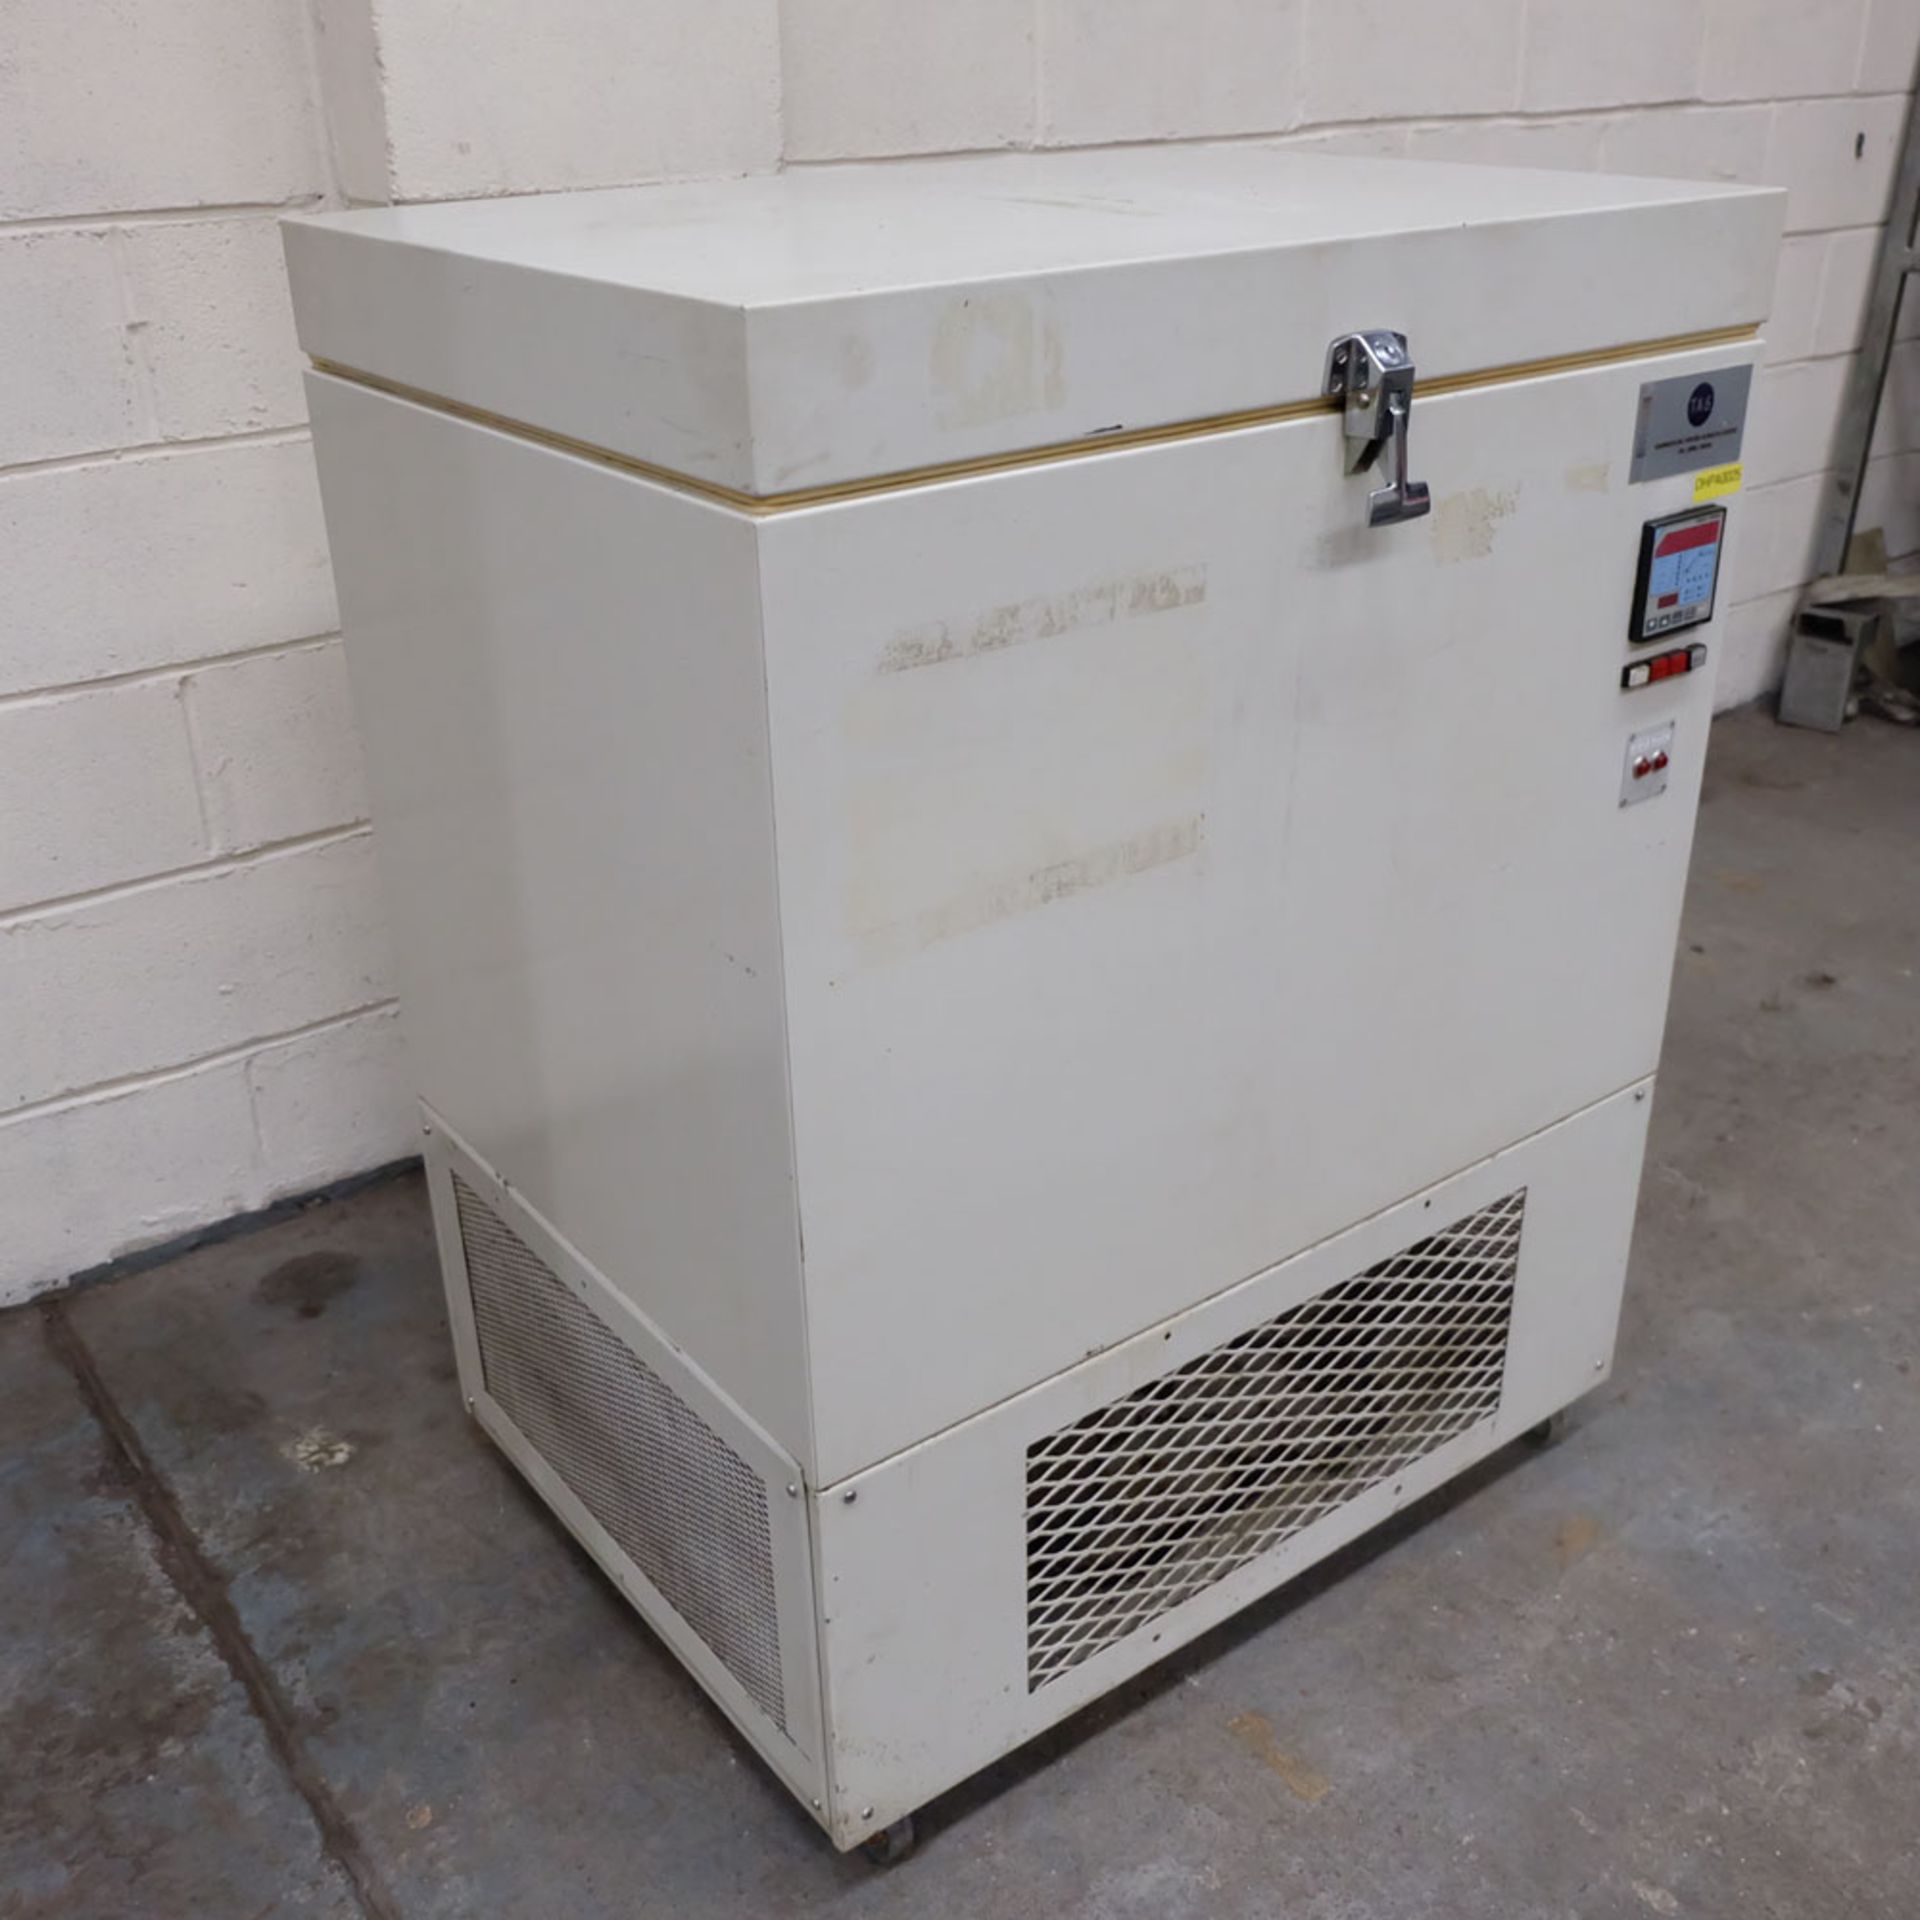 TAS Refrigeration Cabinet. Capacity 15" x 15" x 13" Deep. West 2050 Control. - Image 3 of 9